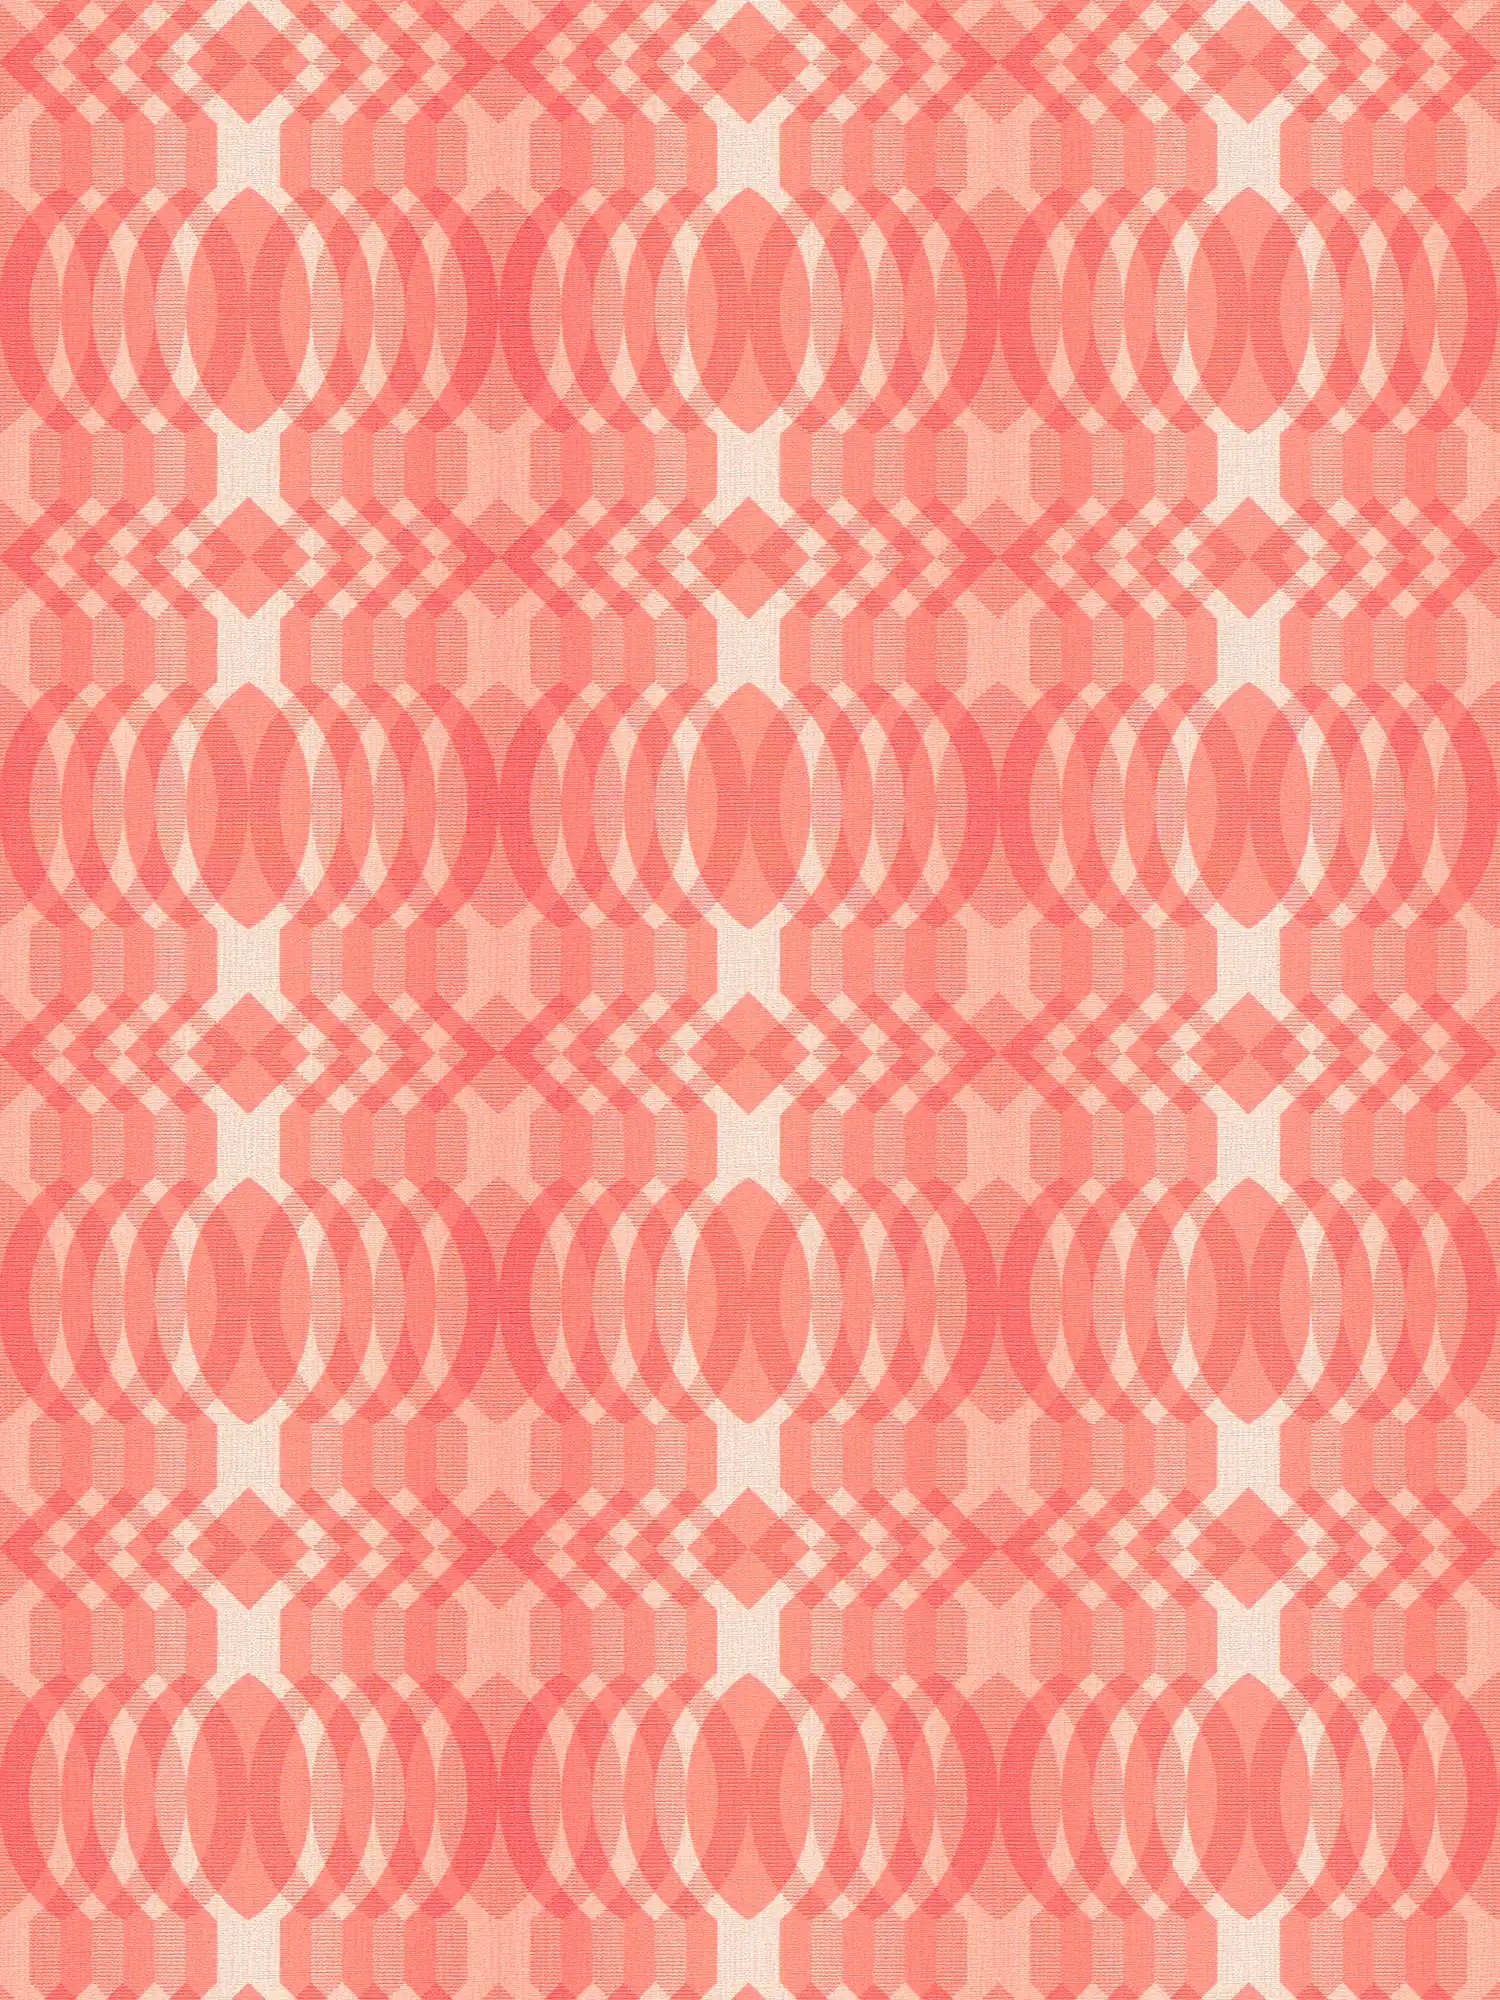 Geometric pattern on non-woven wallpaper in retro style - red, cream, white
